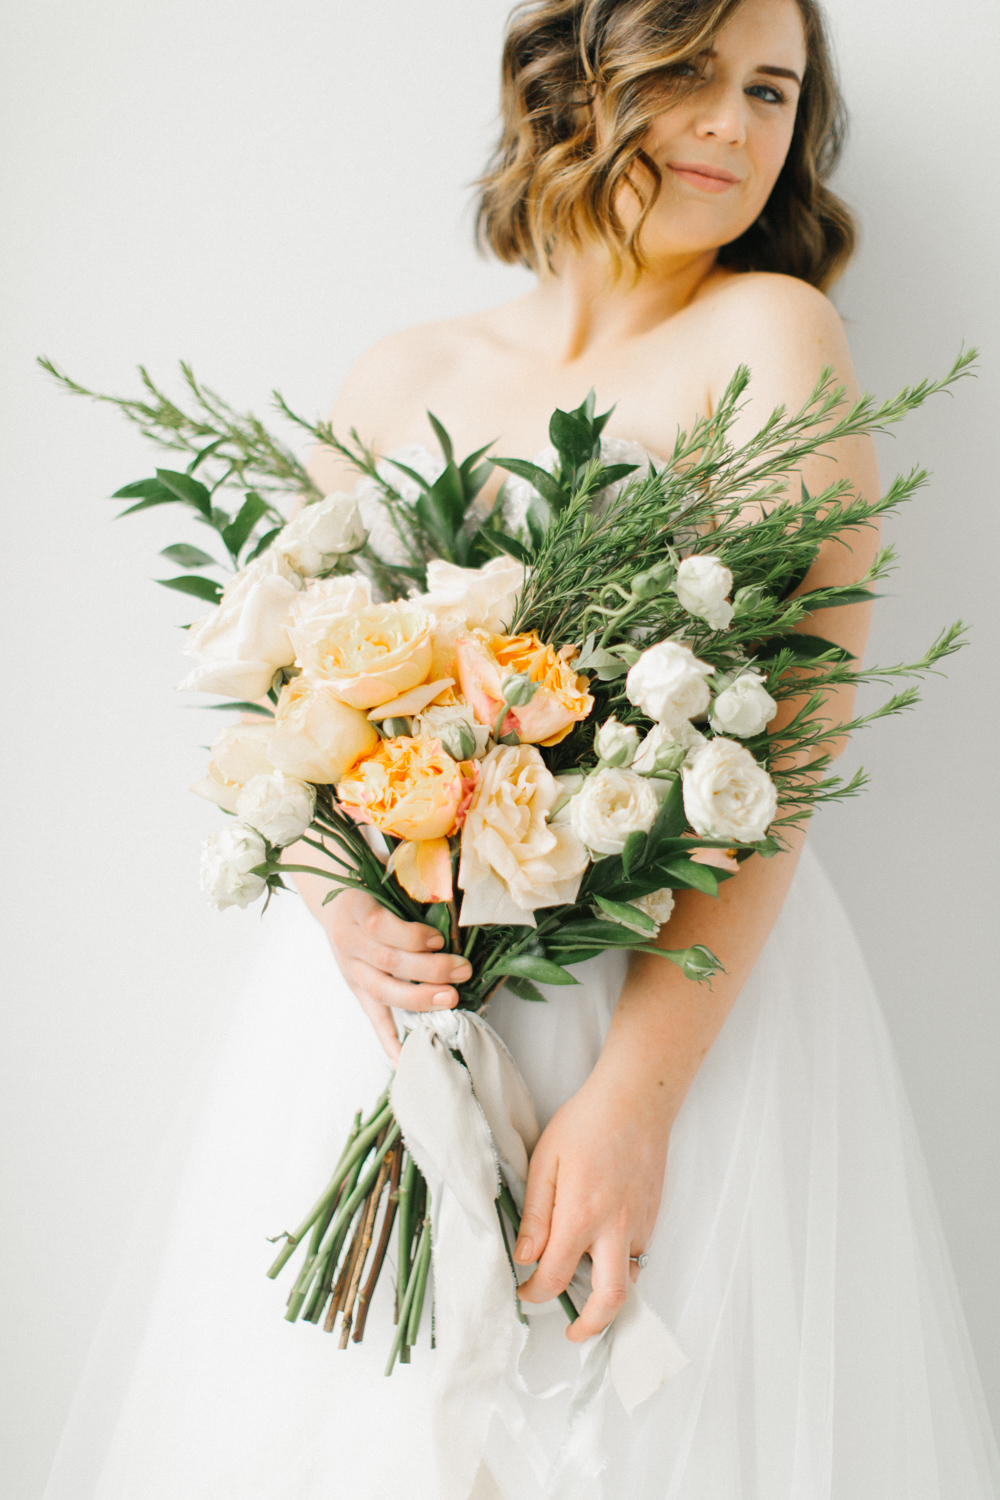 Seattle Fine Art Wedding Photographer | Seattle Downtown White Studio Bridal Session | Stunning Wedding Bouquet | Seattle Bride | Seattle Wedding | Photography Studio Space | Emma Rose Company Wedding Photography-19.jpg